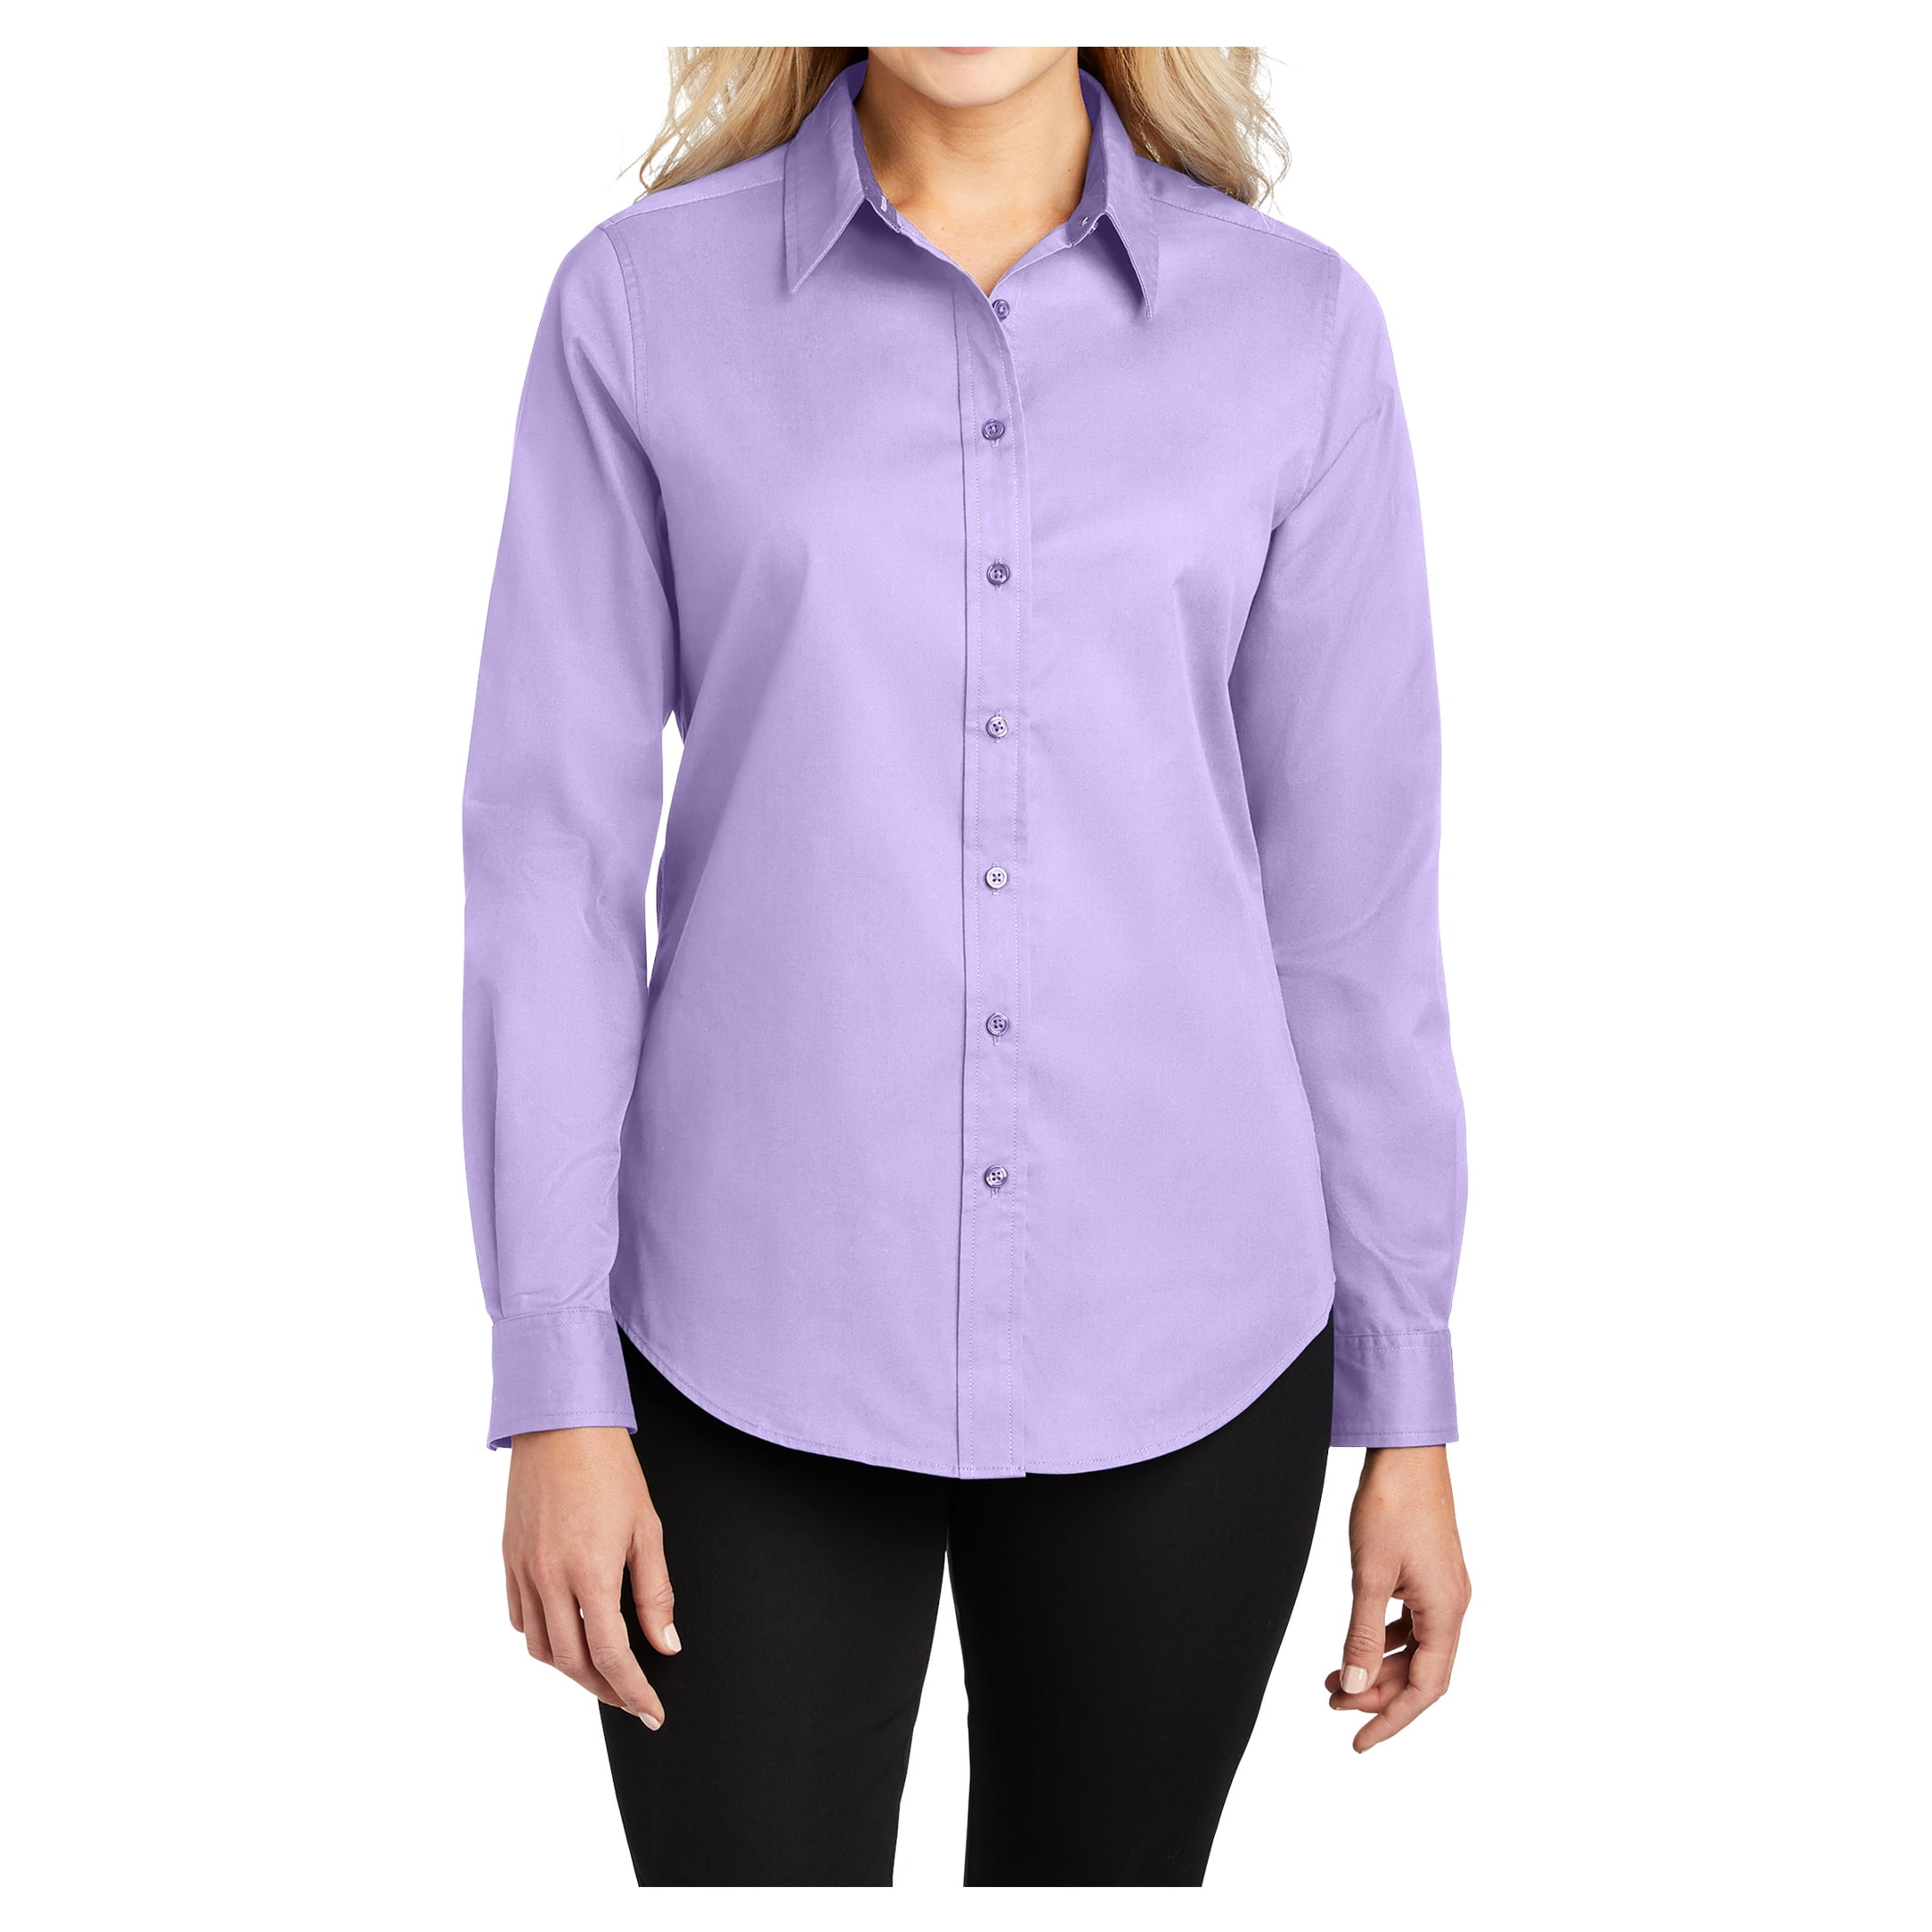 Mafoose Womens Long Sleeve Easy Care Shirt Bright Lavender M - Walmart.com